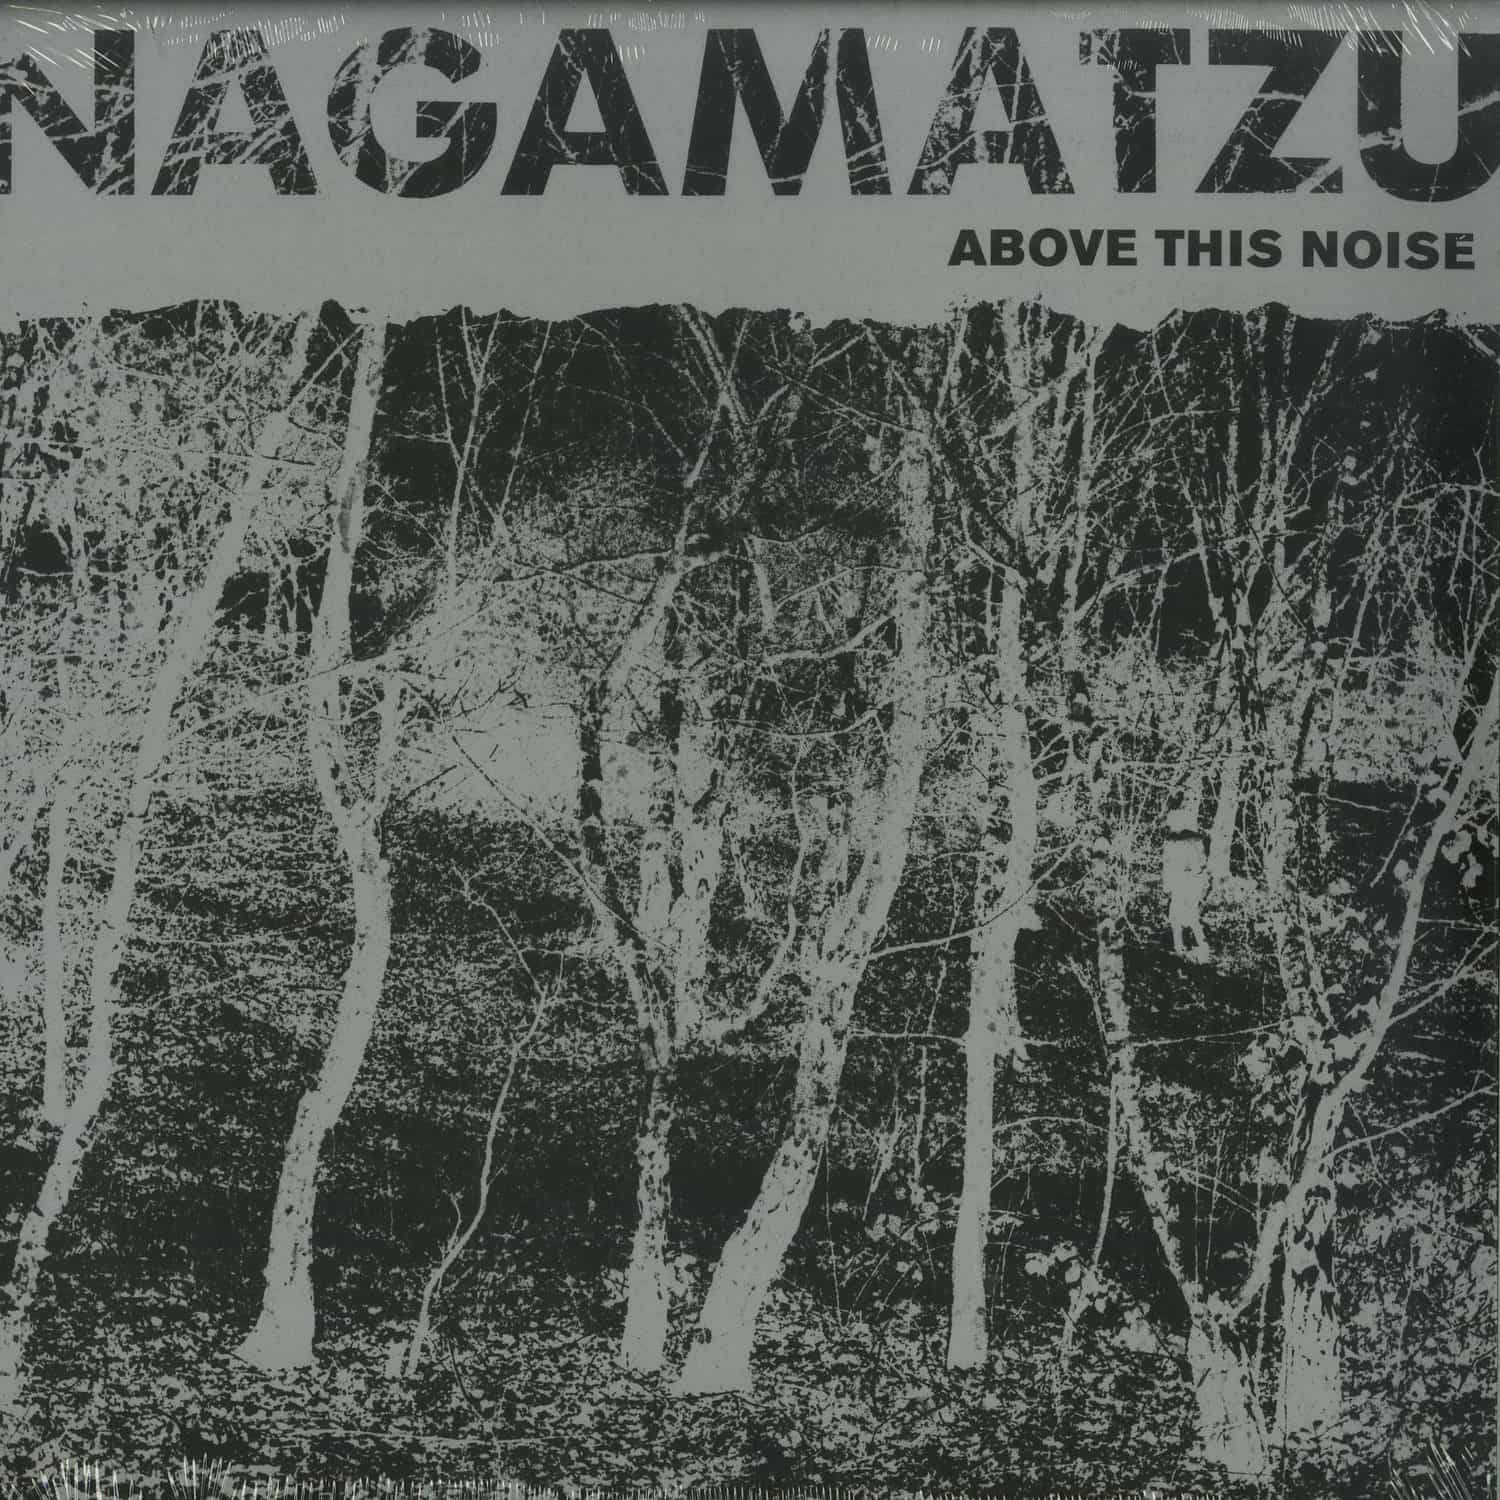 Nagamatzu - ABOVE THIS NOISE 